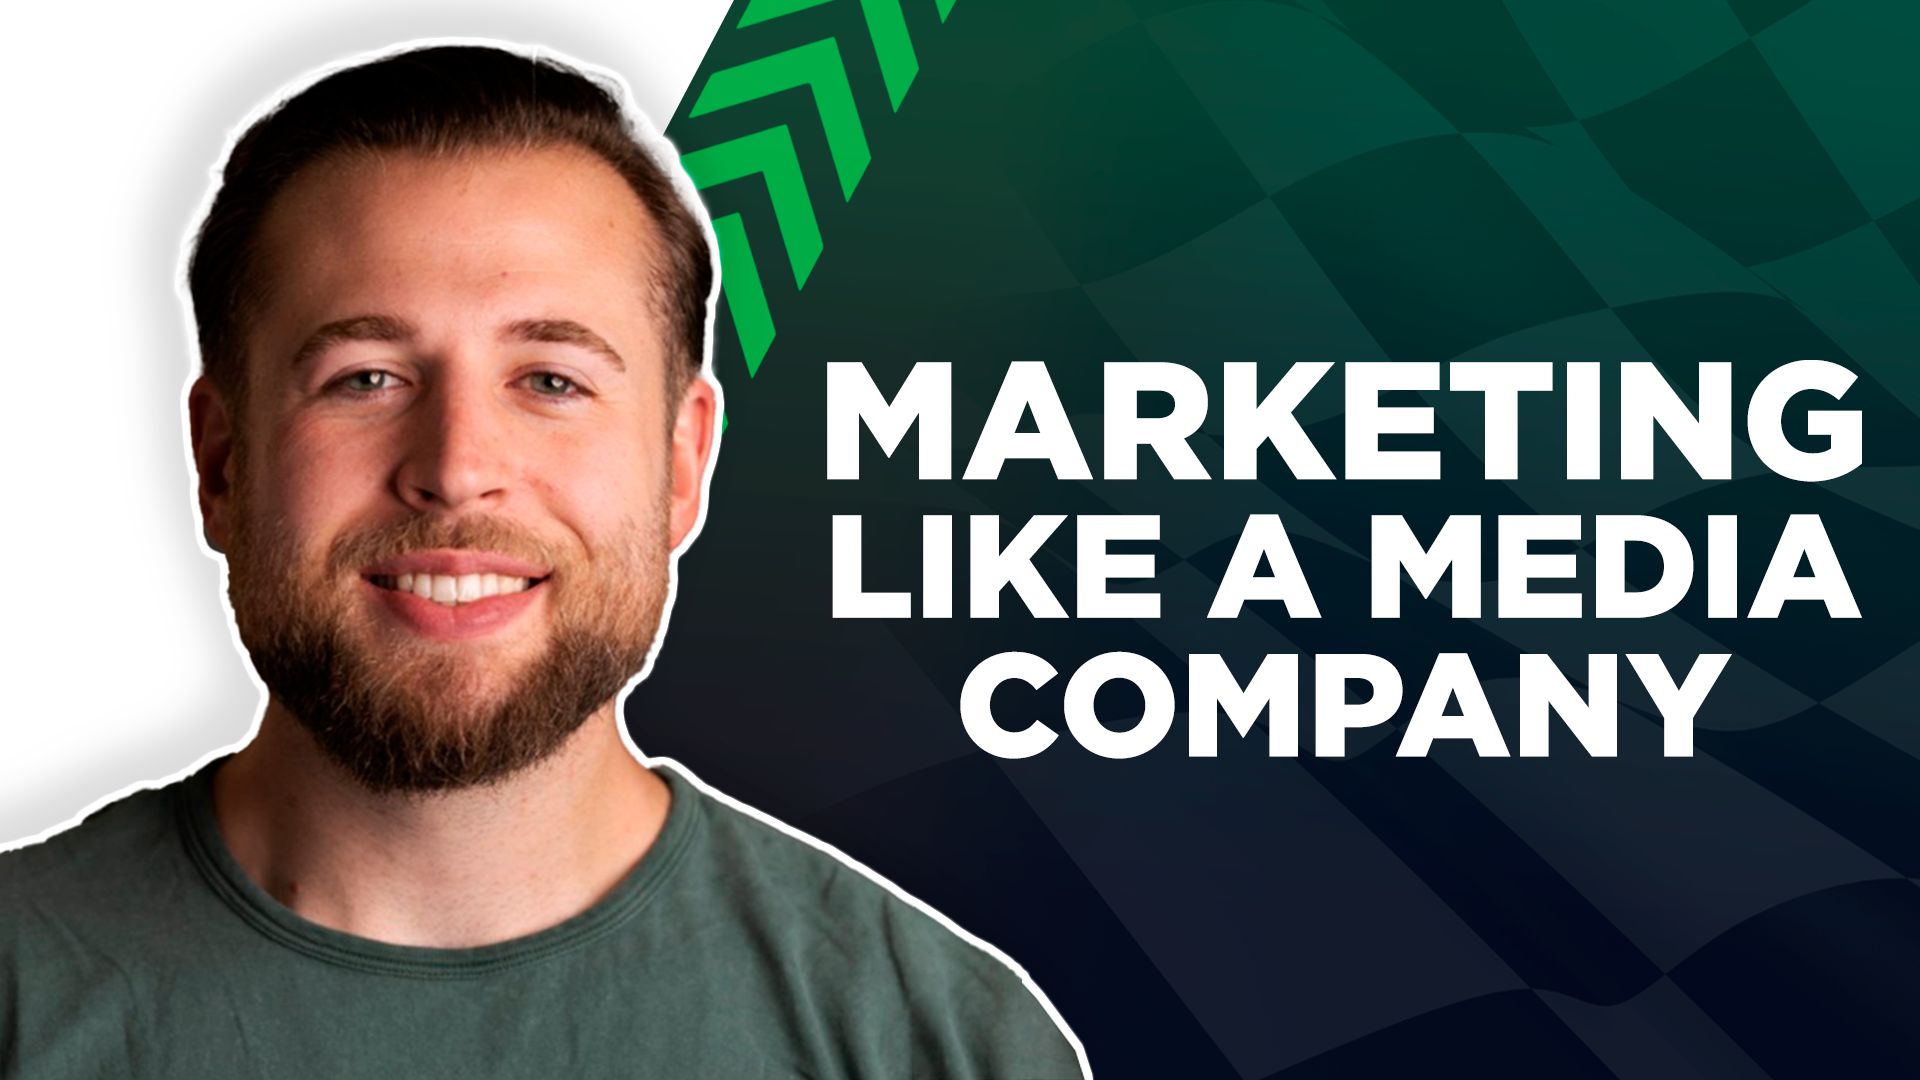 Podcast Pit Stop: Corey Haines on Marketing Like a Media Company